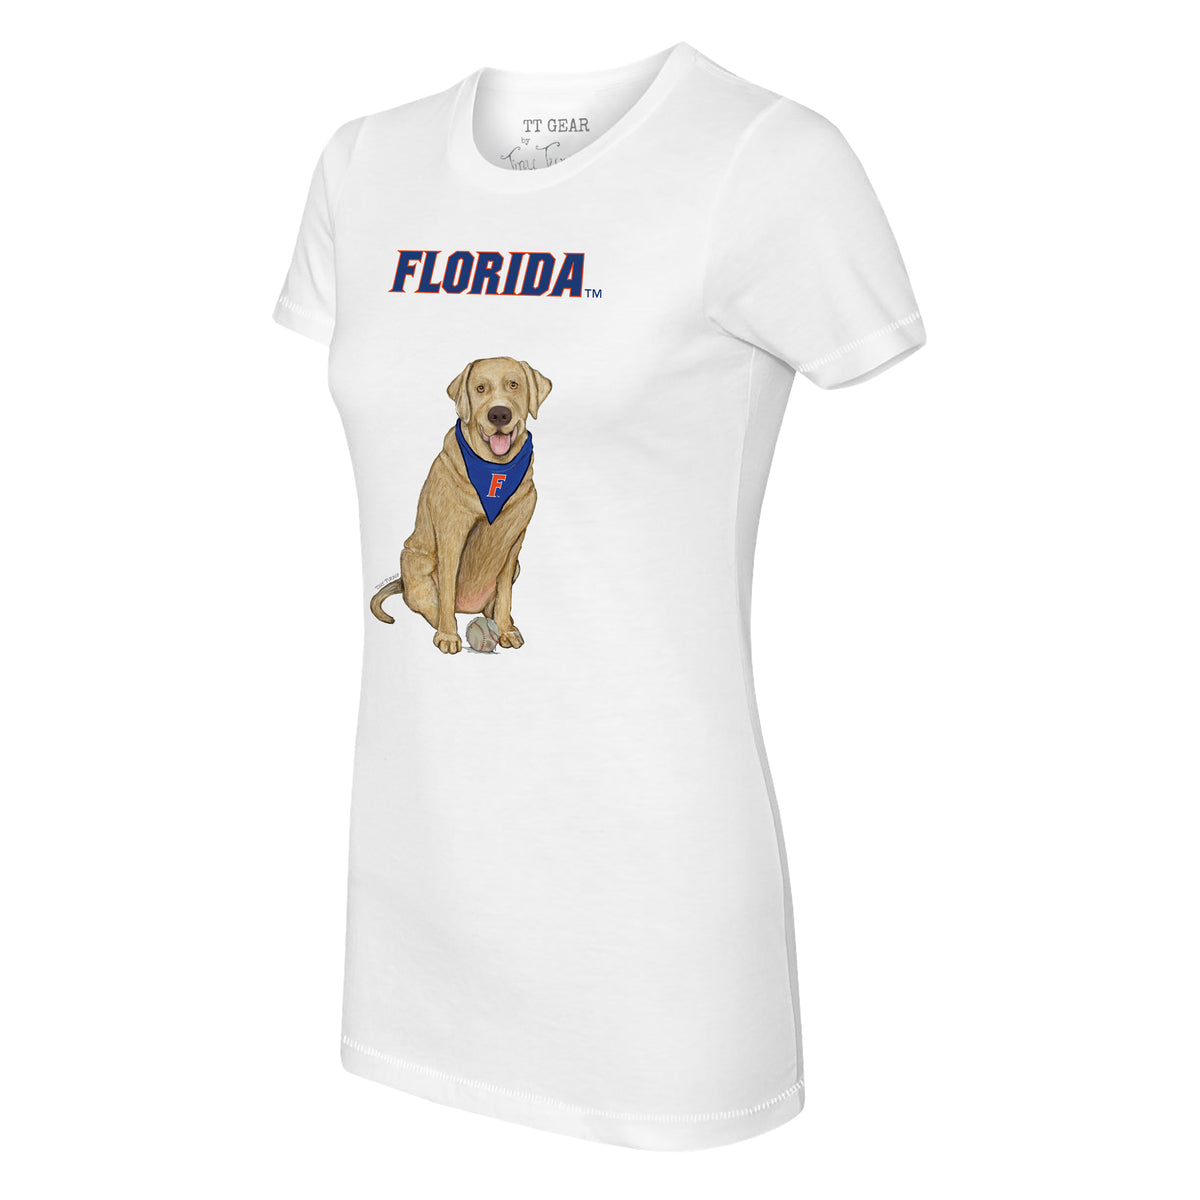 Florida Gators Yellow Labrador Retriever Tee Shirt